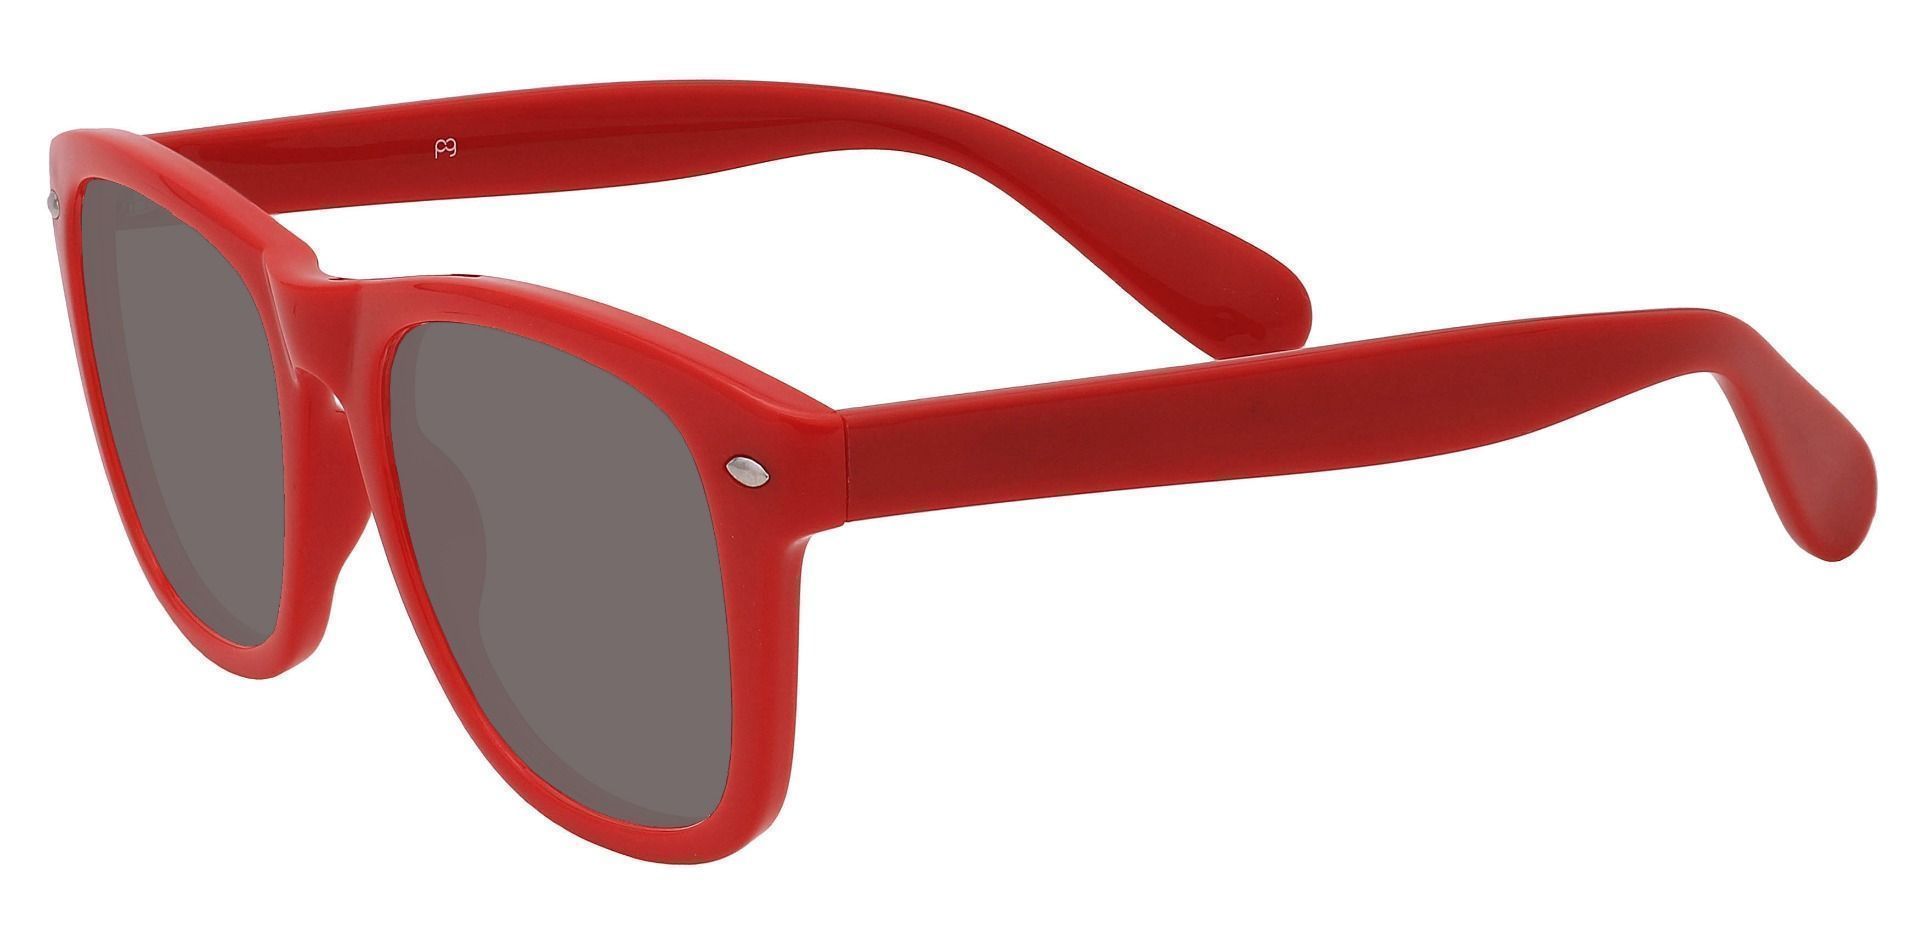 Yolanda Square Reading Sunglasses - Red Frame With Gray Lenses